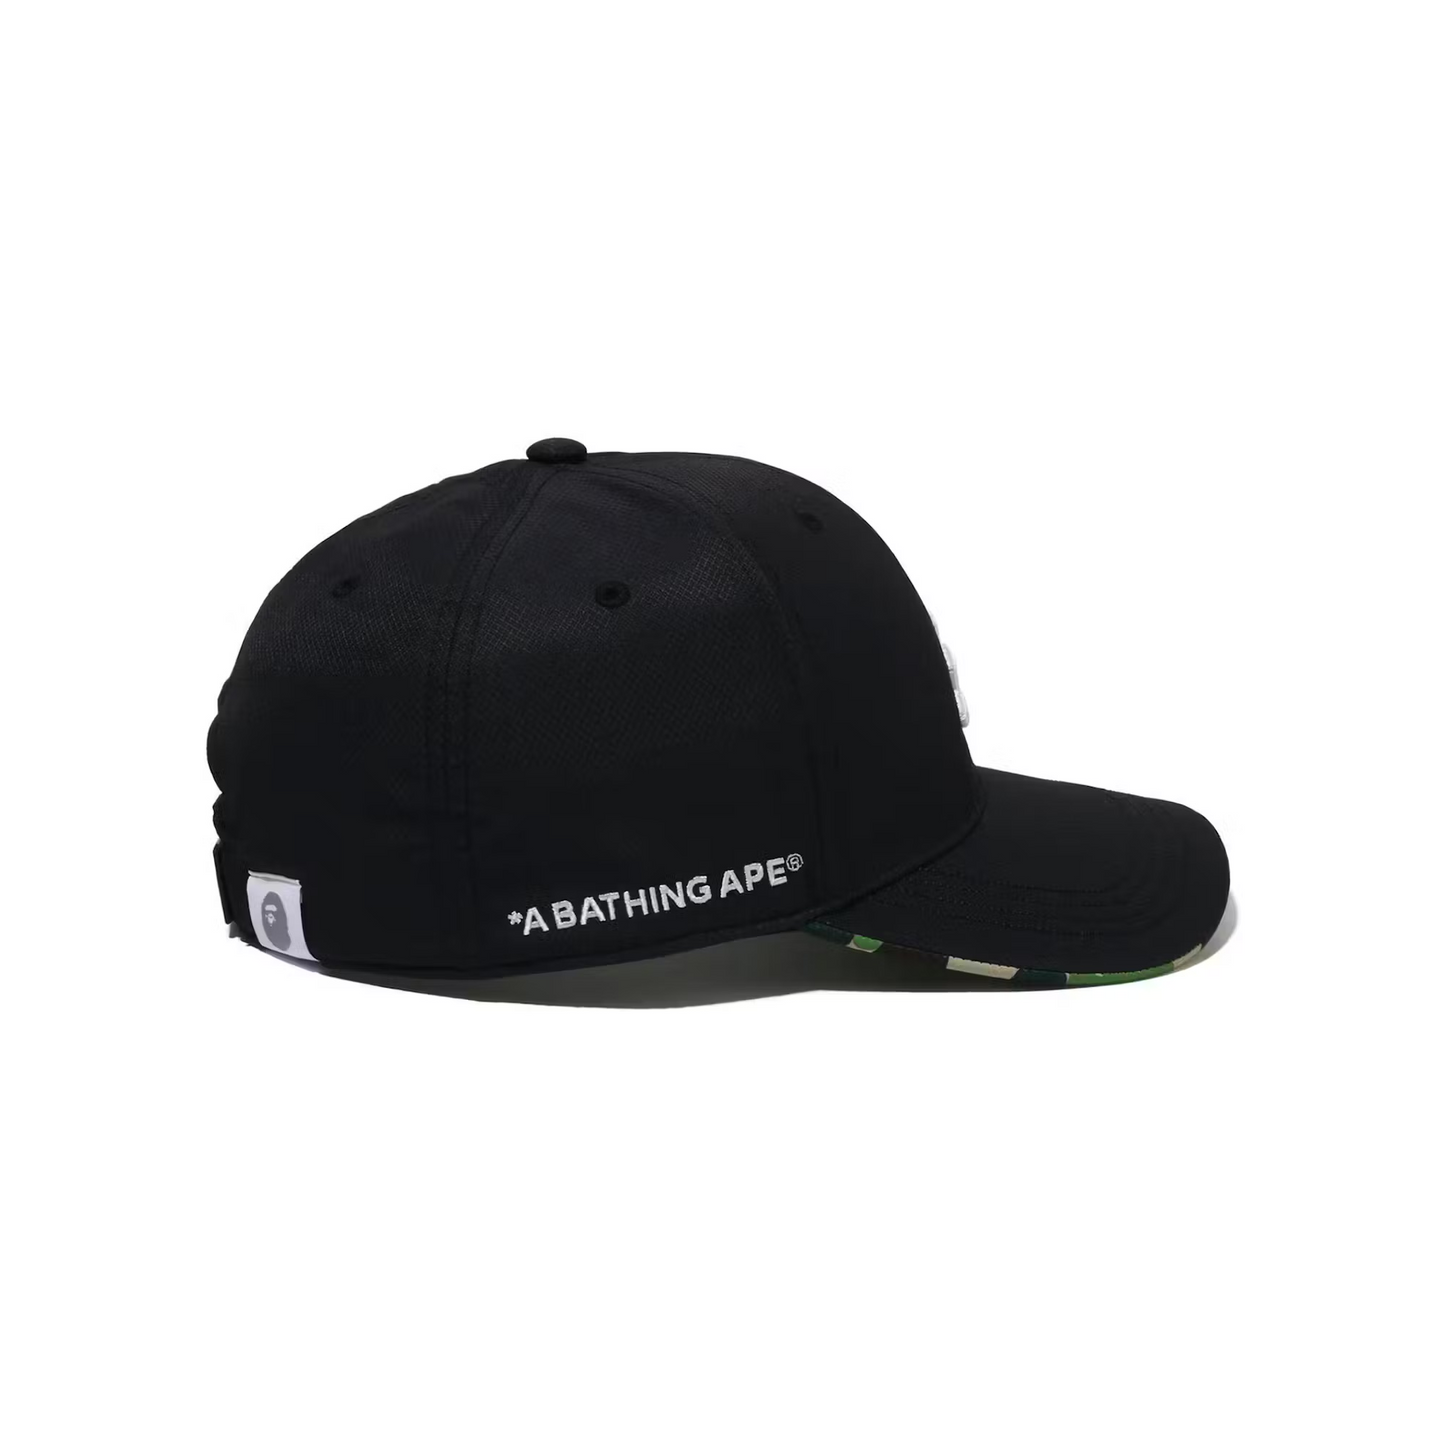 BAPE x Adidas Golf Cap Black